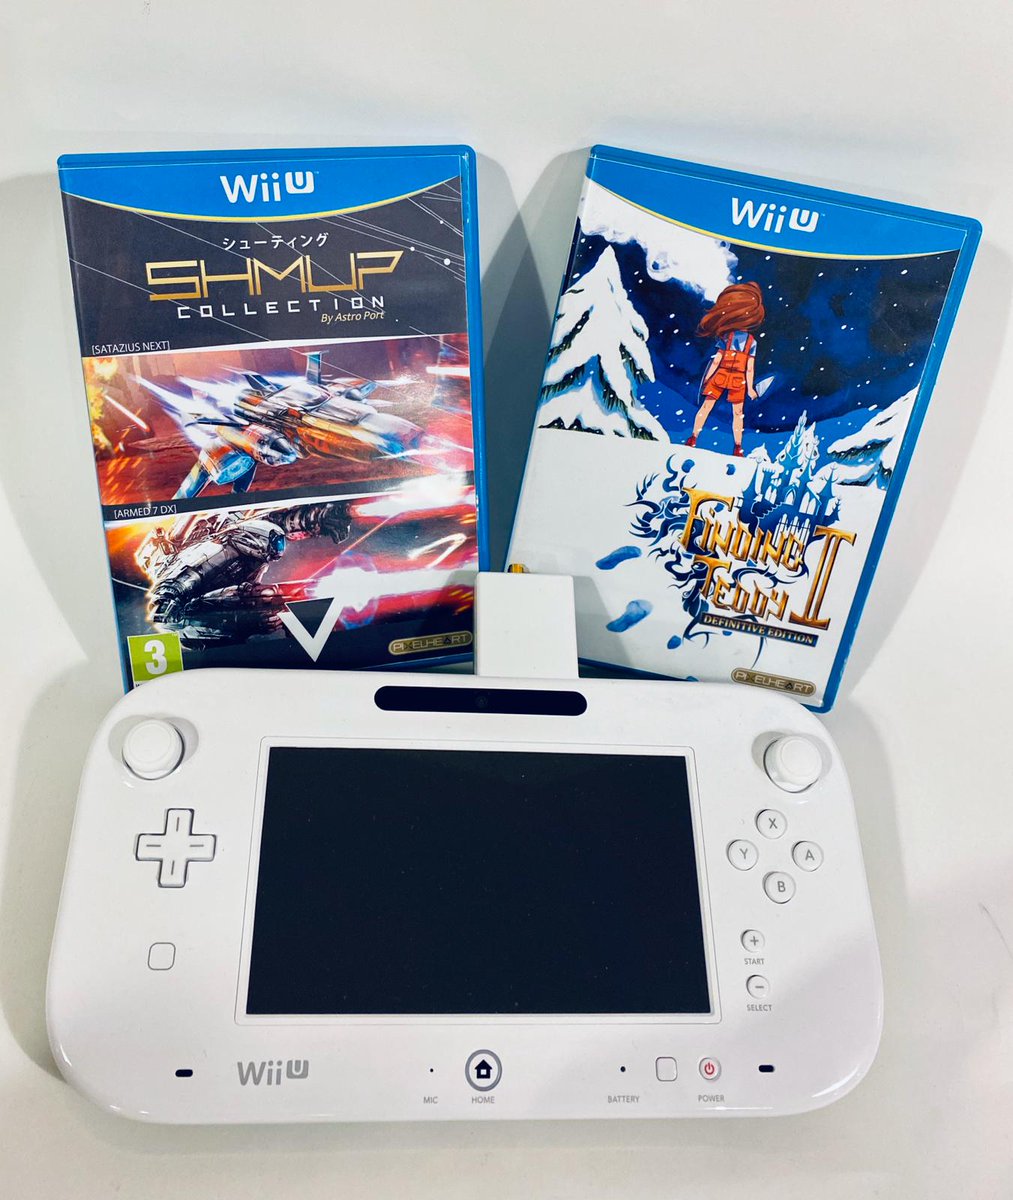 Wiiu用ソフト Finding Teddy Ii と Shmup Collection のパッケージ版がヨーロッパ向けとして発売決定 Nintendo Switch 情報ブログ